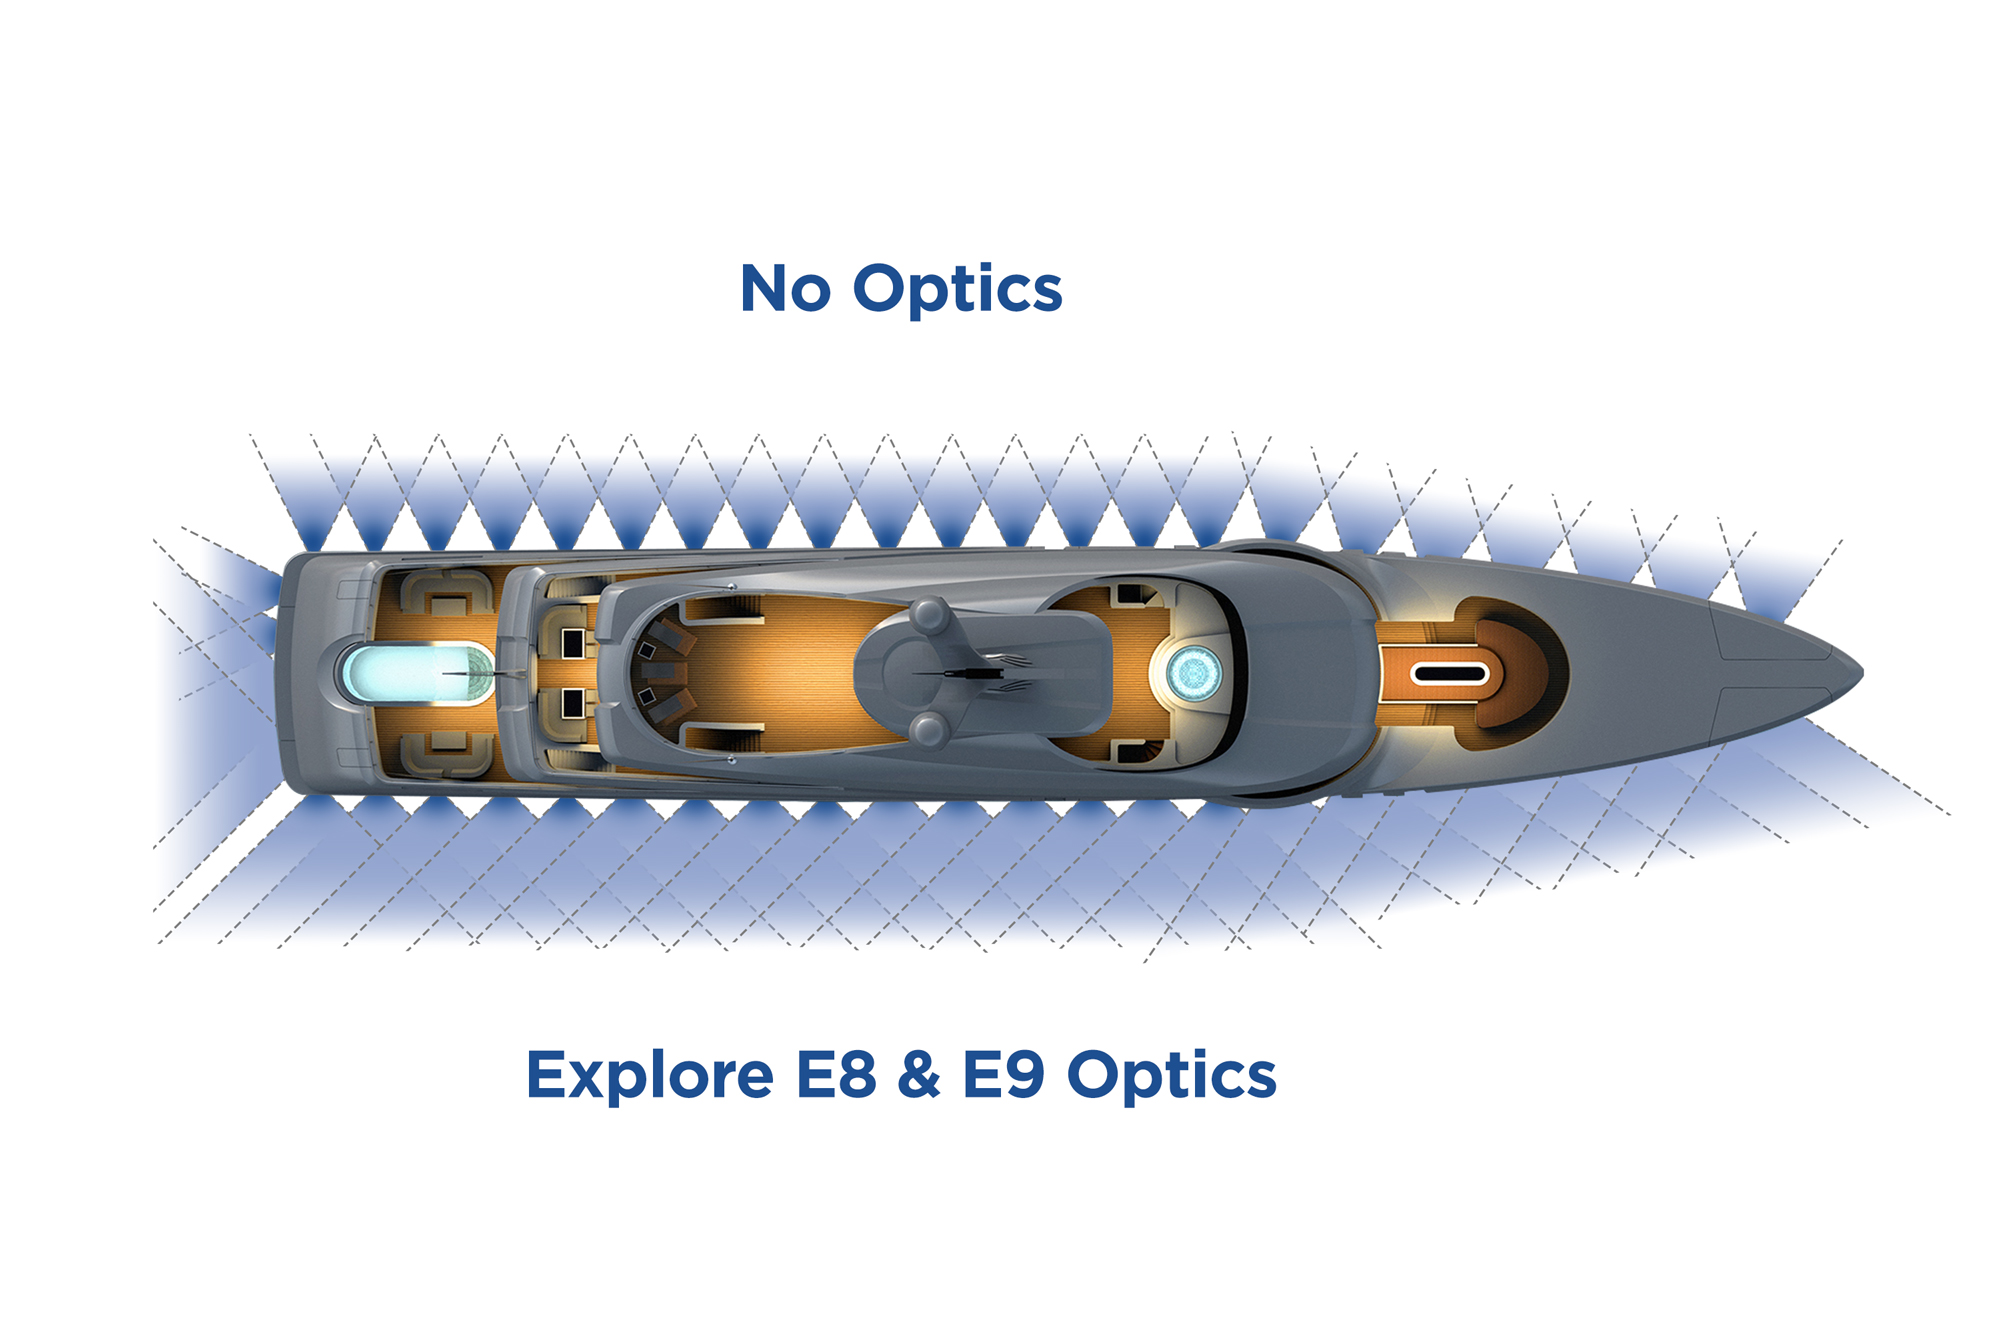 Benefits of Explore E9 angled optics